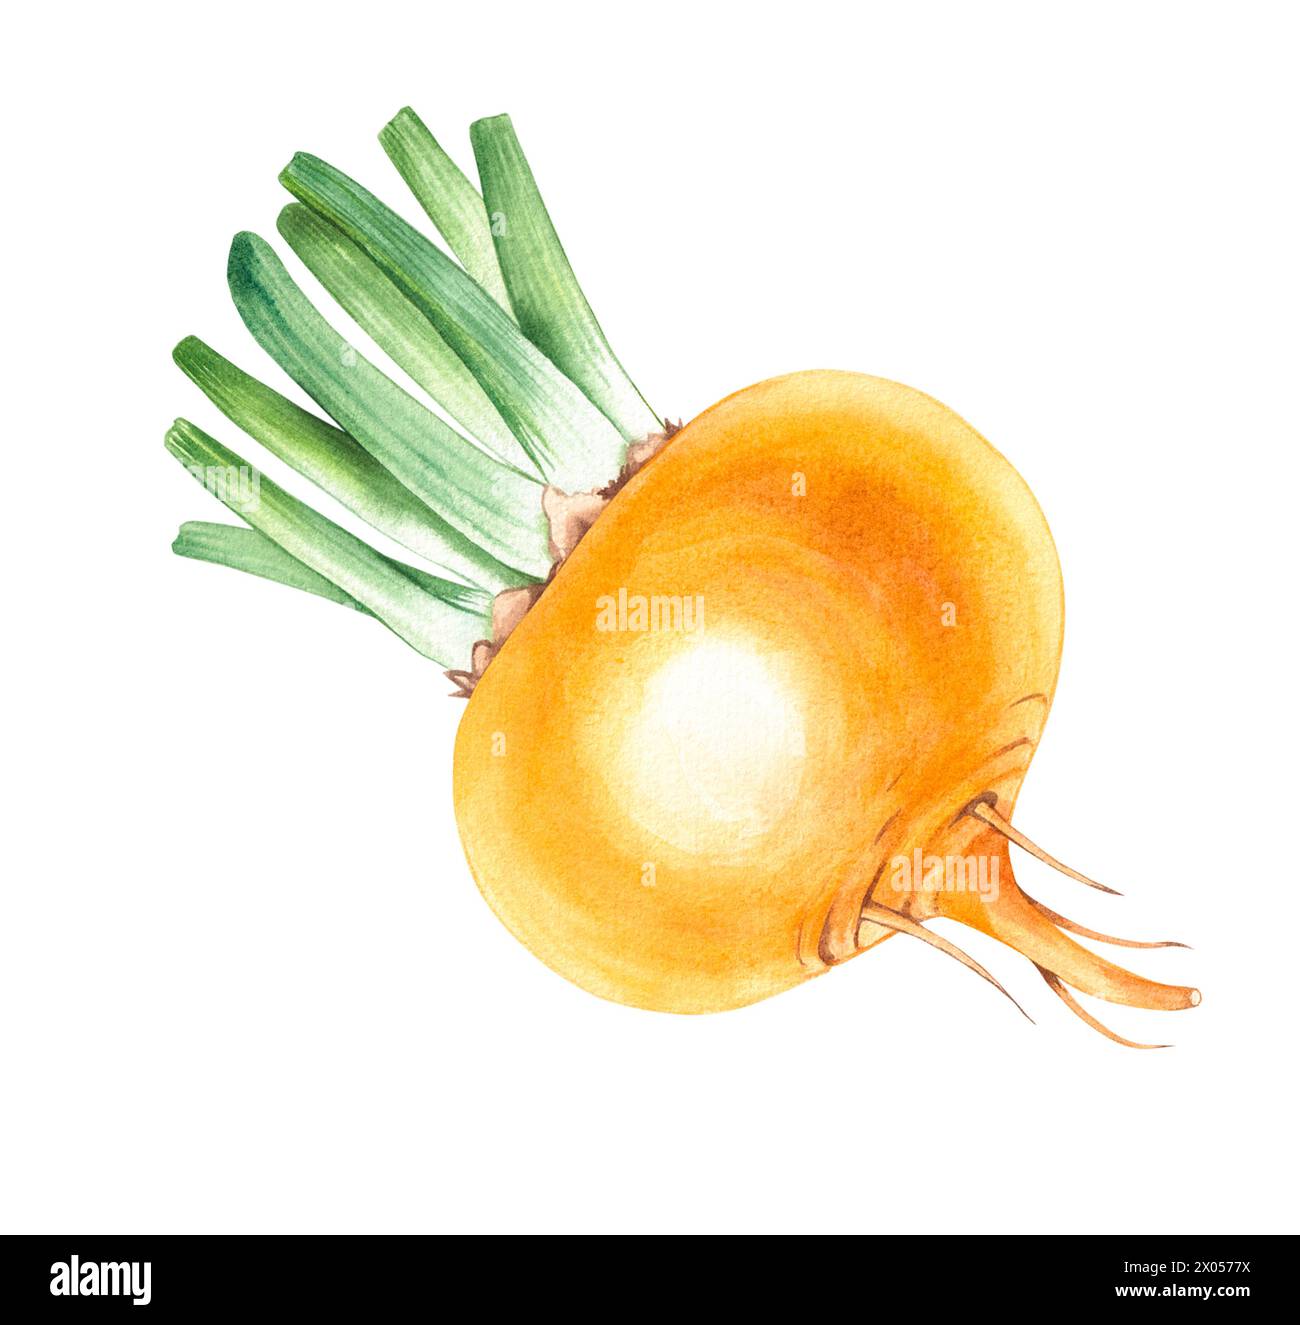 Watercolor yellow turnip vegetable hand drawn isolated on white. Turnip vegetable for menu design, kitchen utensils, logo, printing, etc. Stock Photo